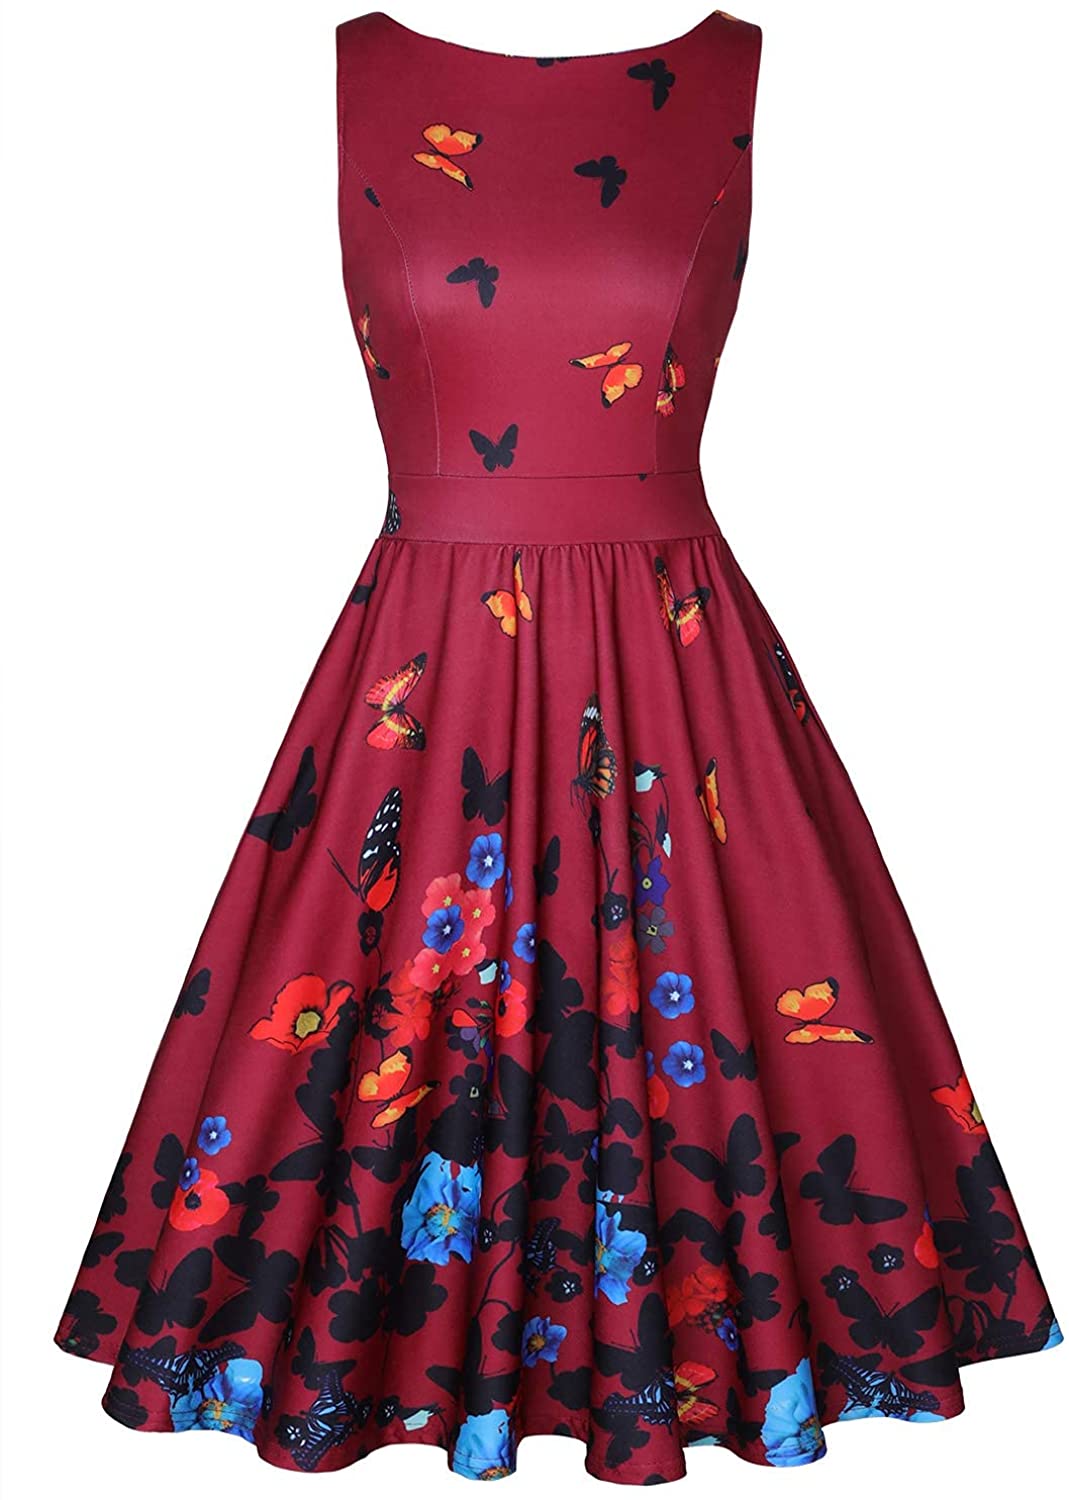 MISSJOY Womens Vintage 1950s Sleeveless Floral Rockabilly Garden Party Dress 